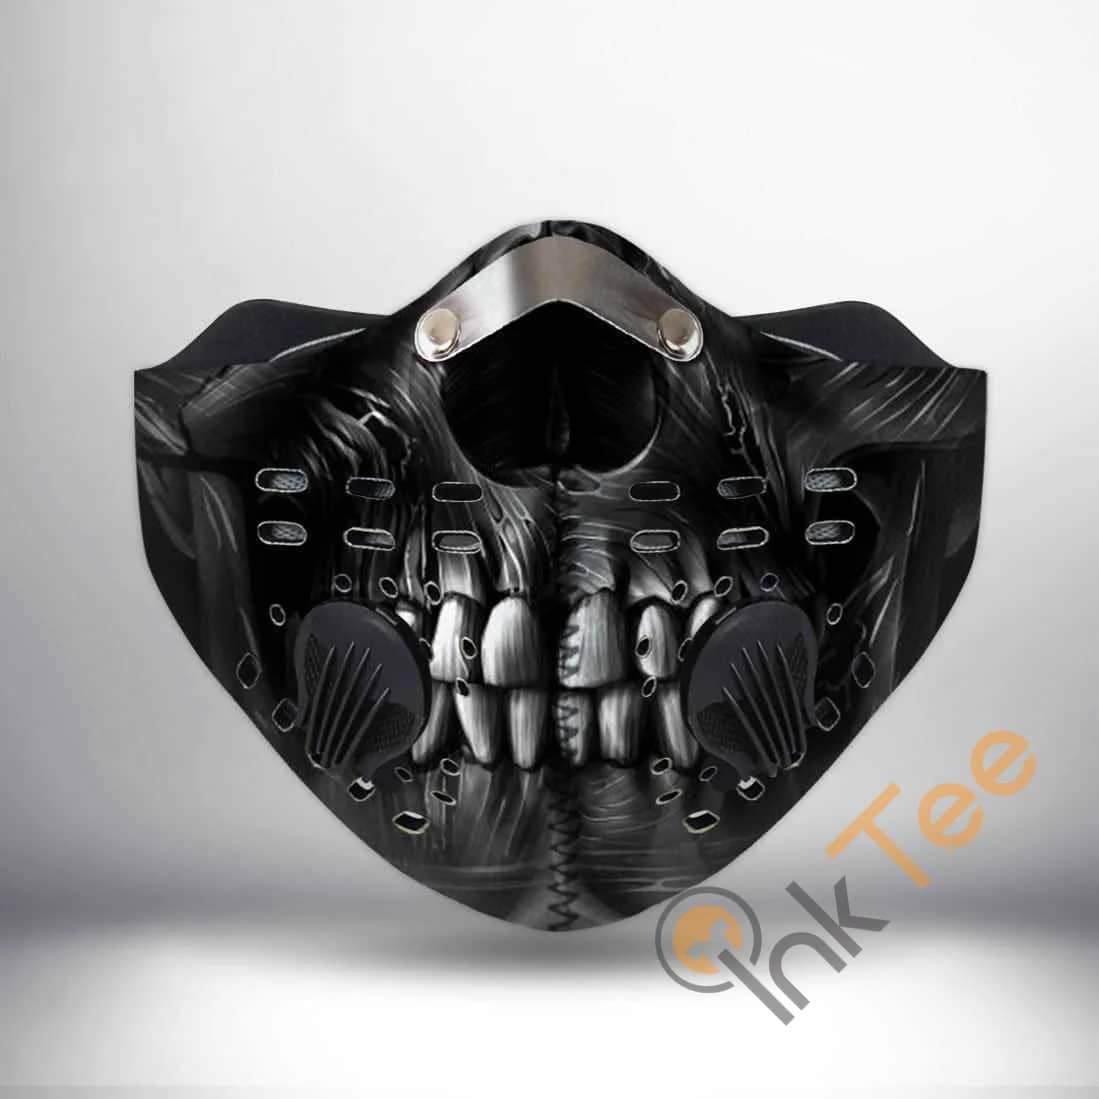 Skull Filter Activated Carbon Pm 2.5 Fm Sku 418 Face Mask